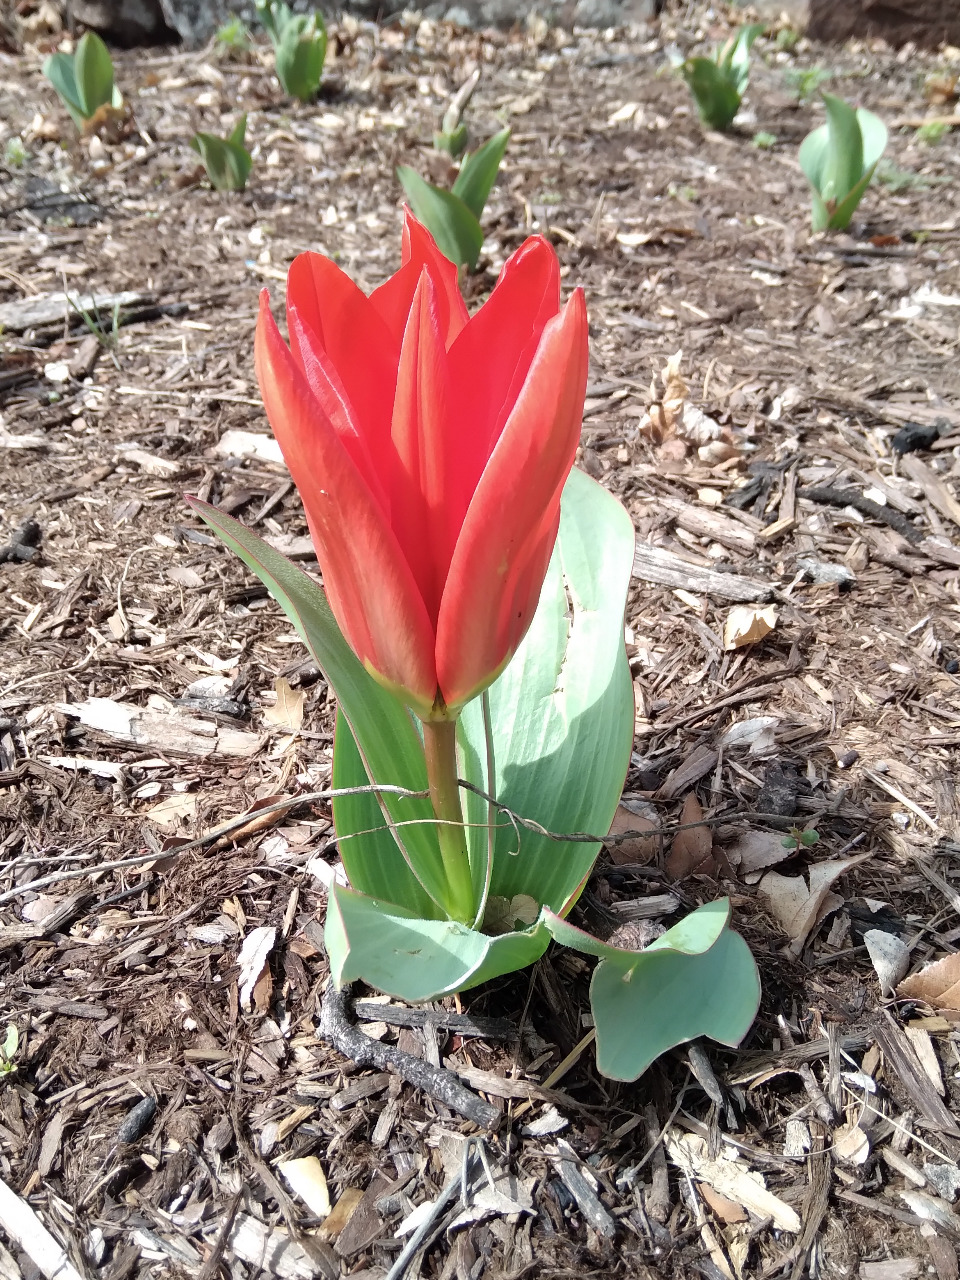 Tulip in bloom